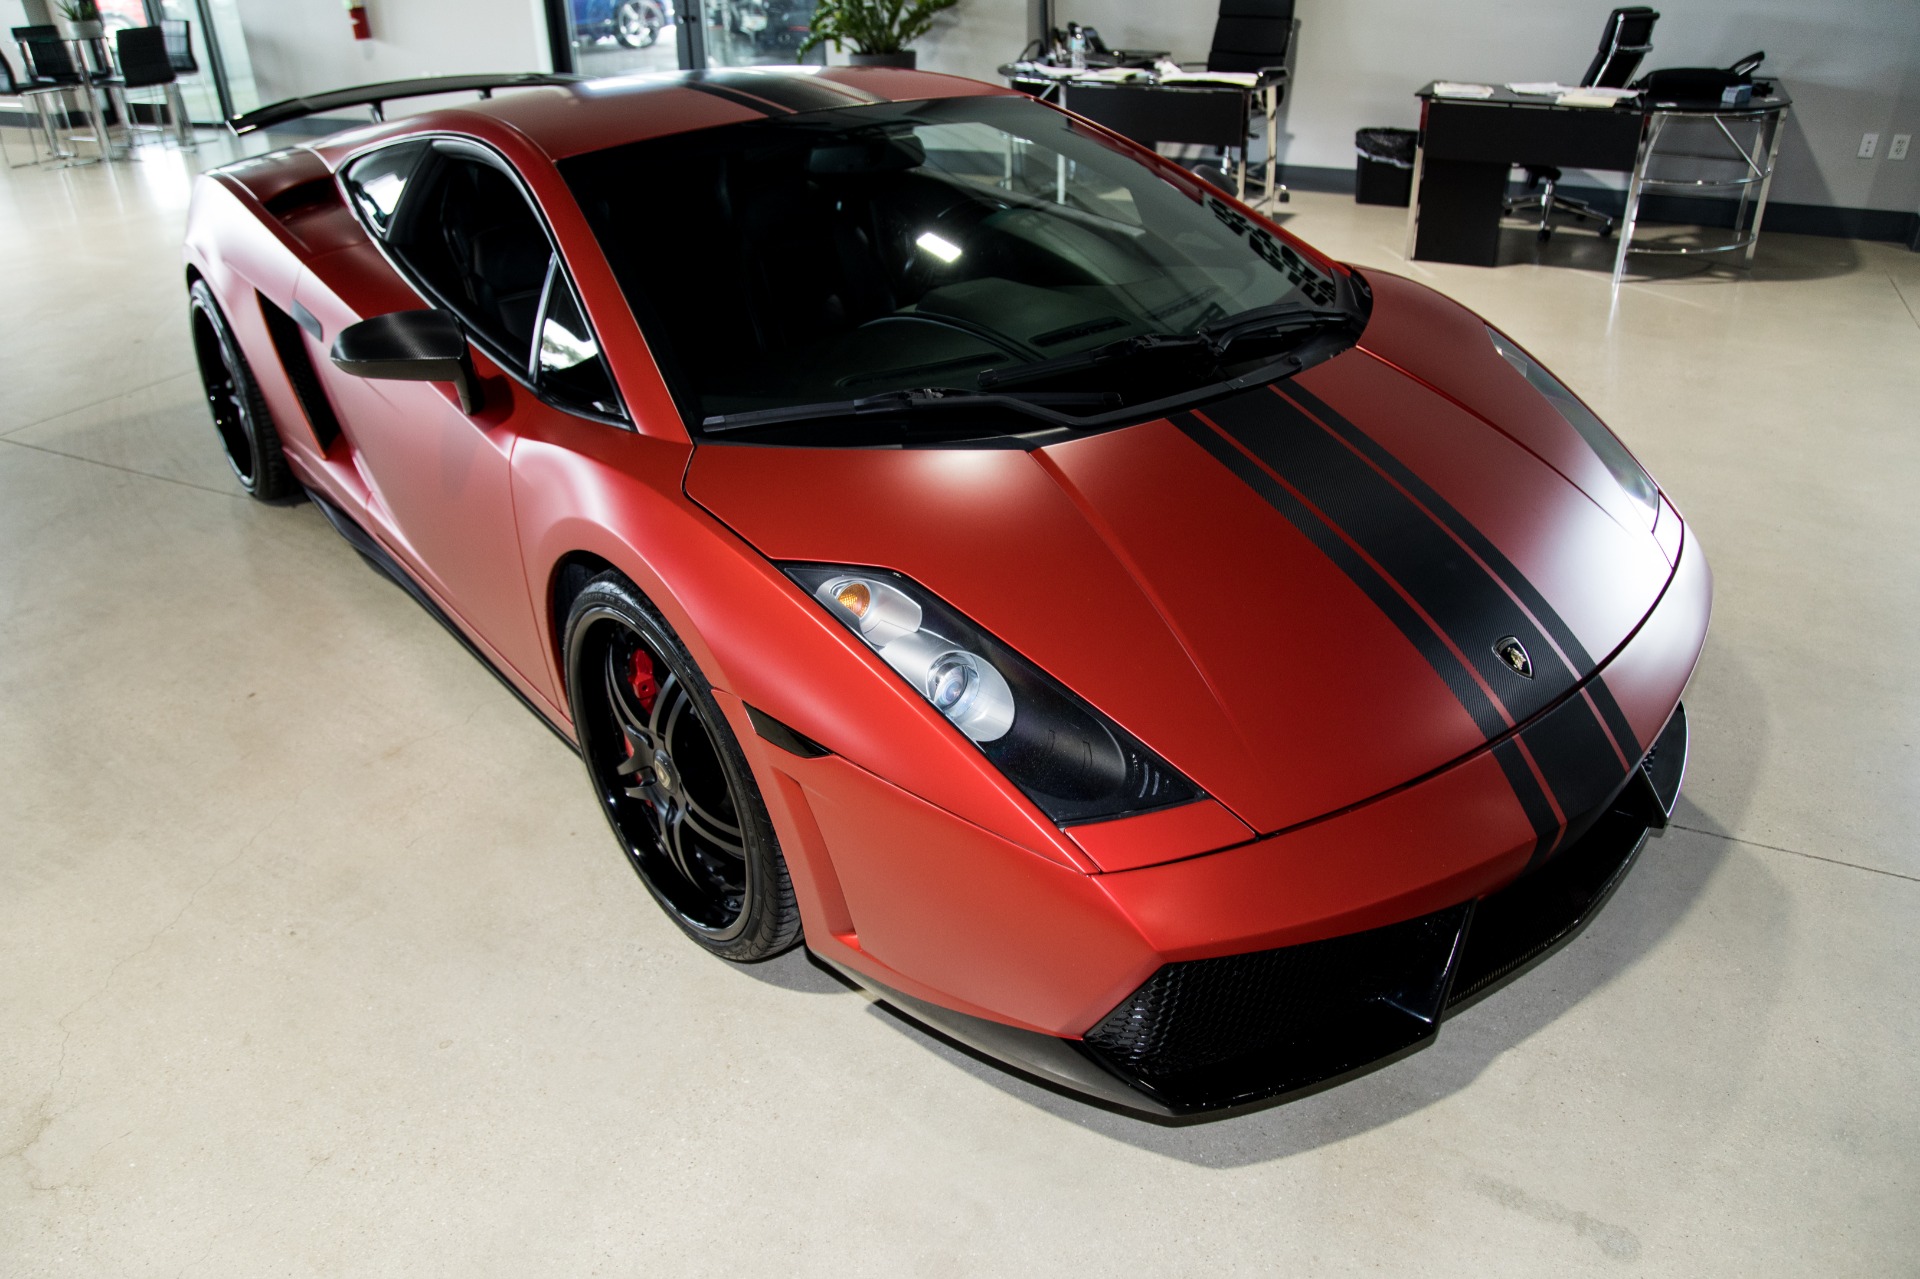 Used 2005 Lamborghini Gallardo For Sale ($85,900) | Marino Performance  Motors Stock #A02056